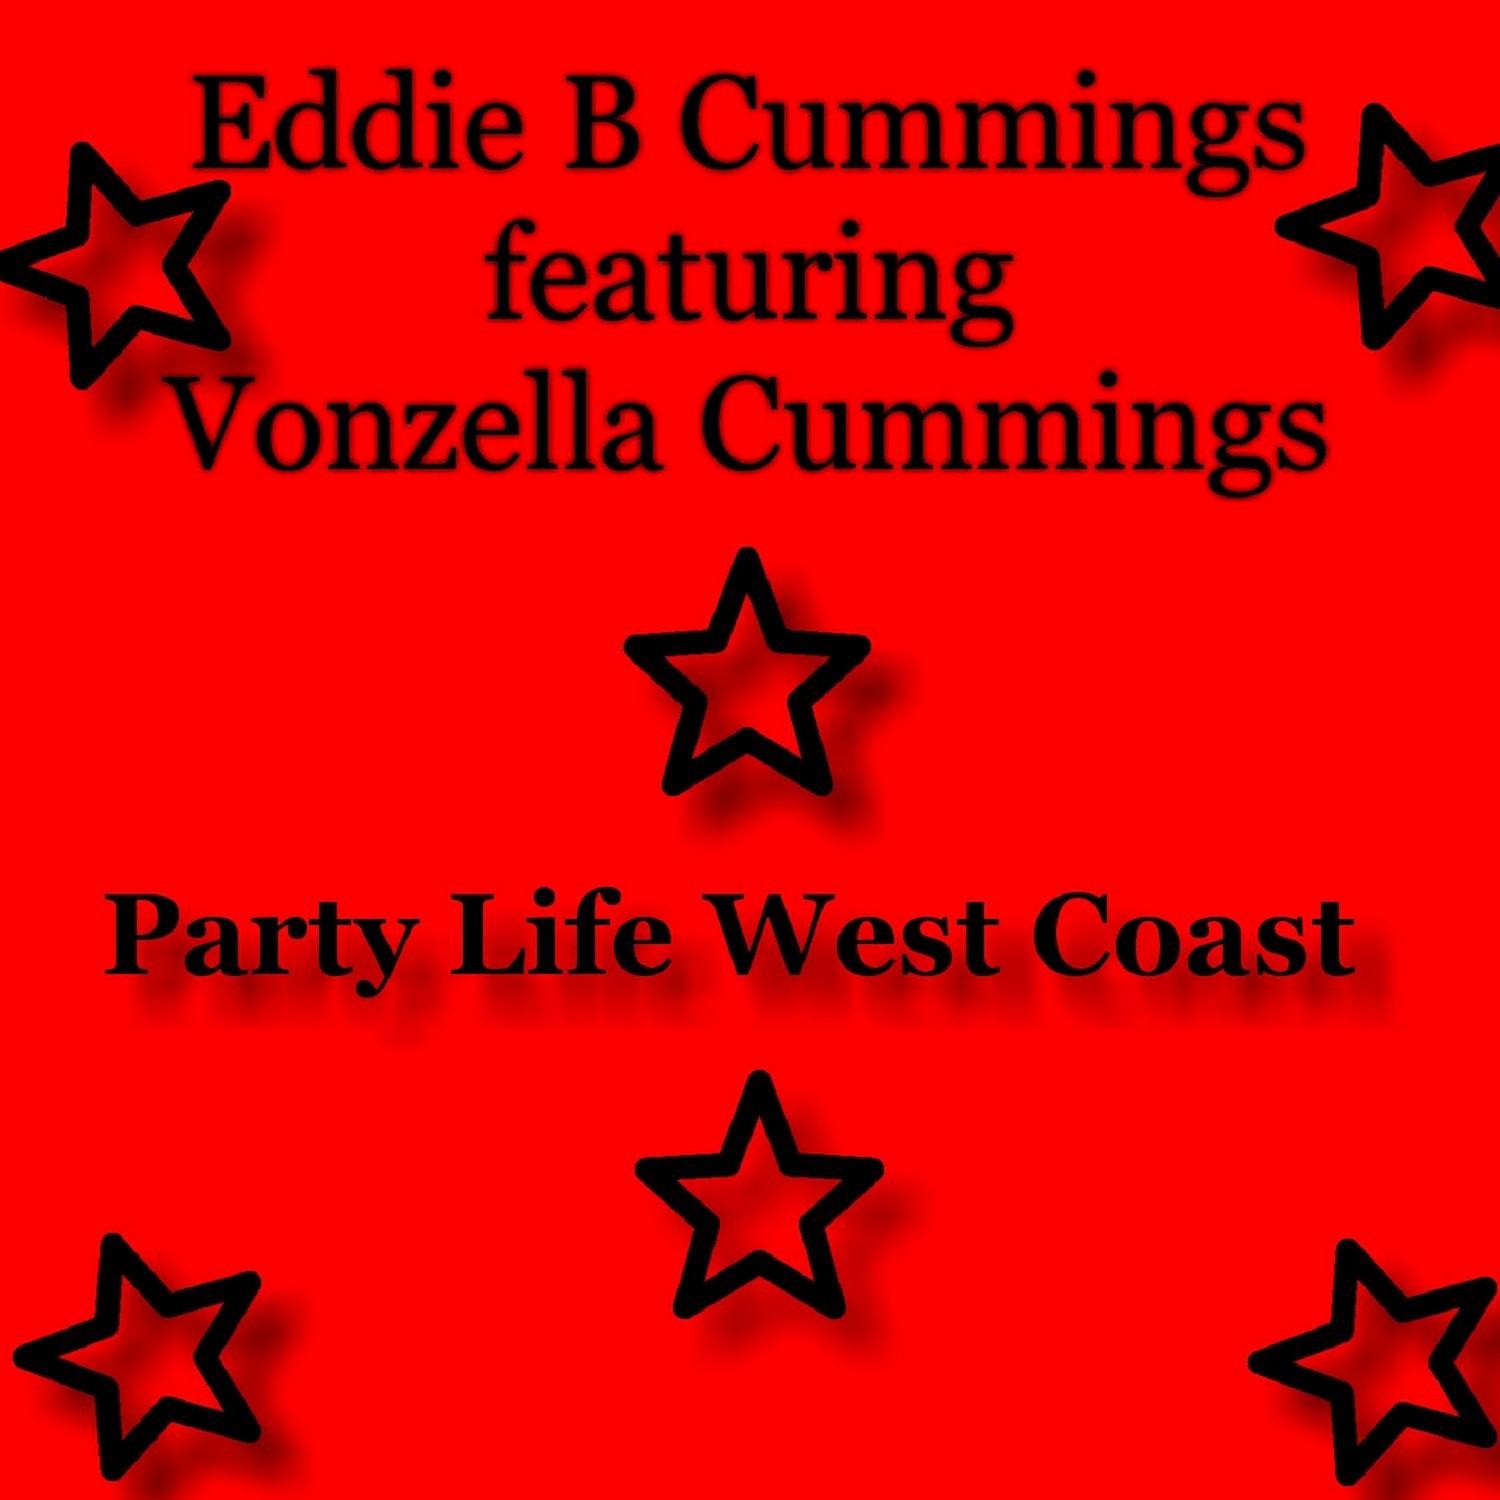 Party Life West Coast